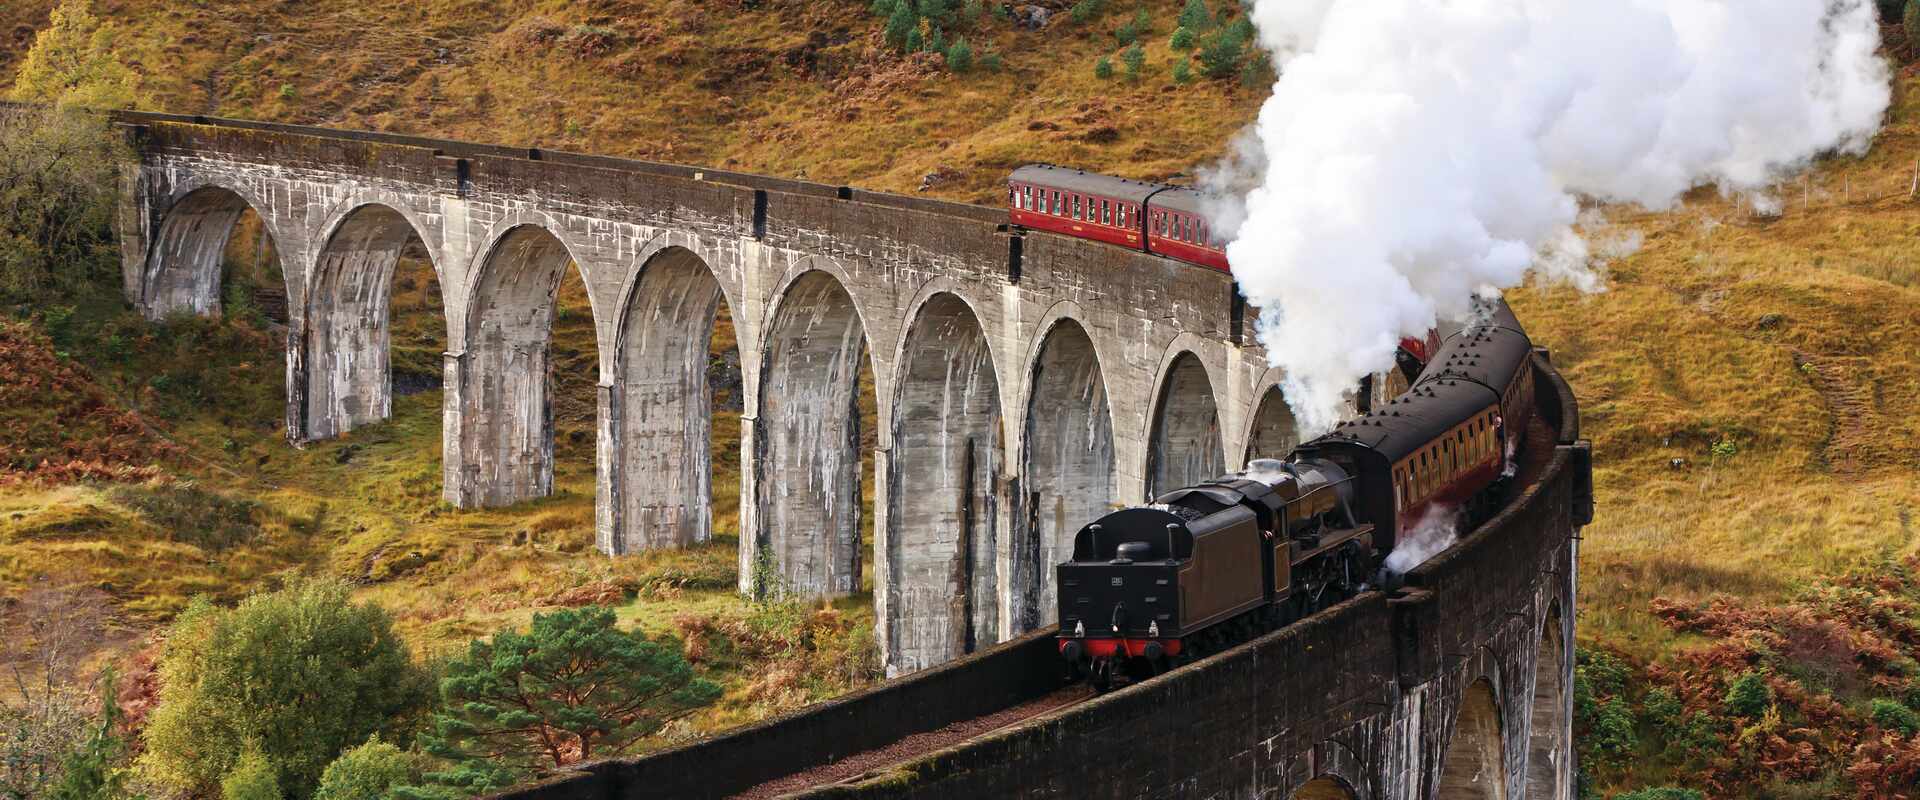 Jacobite Steam Train, Scotland